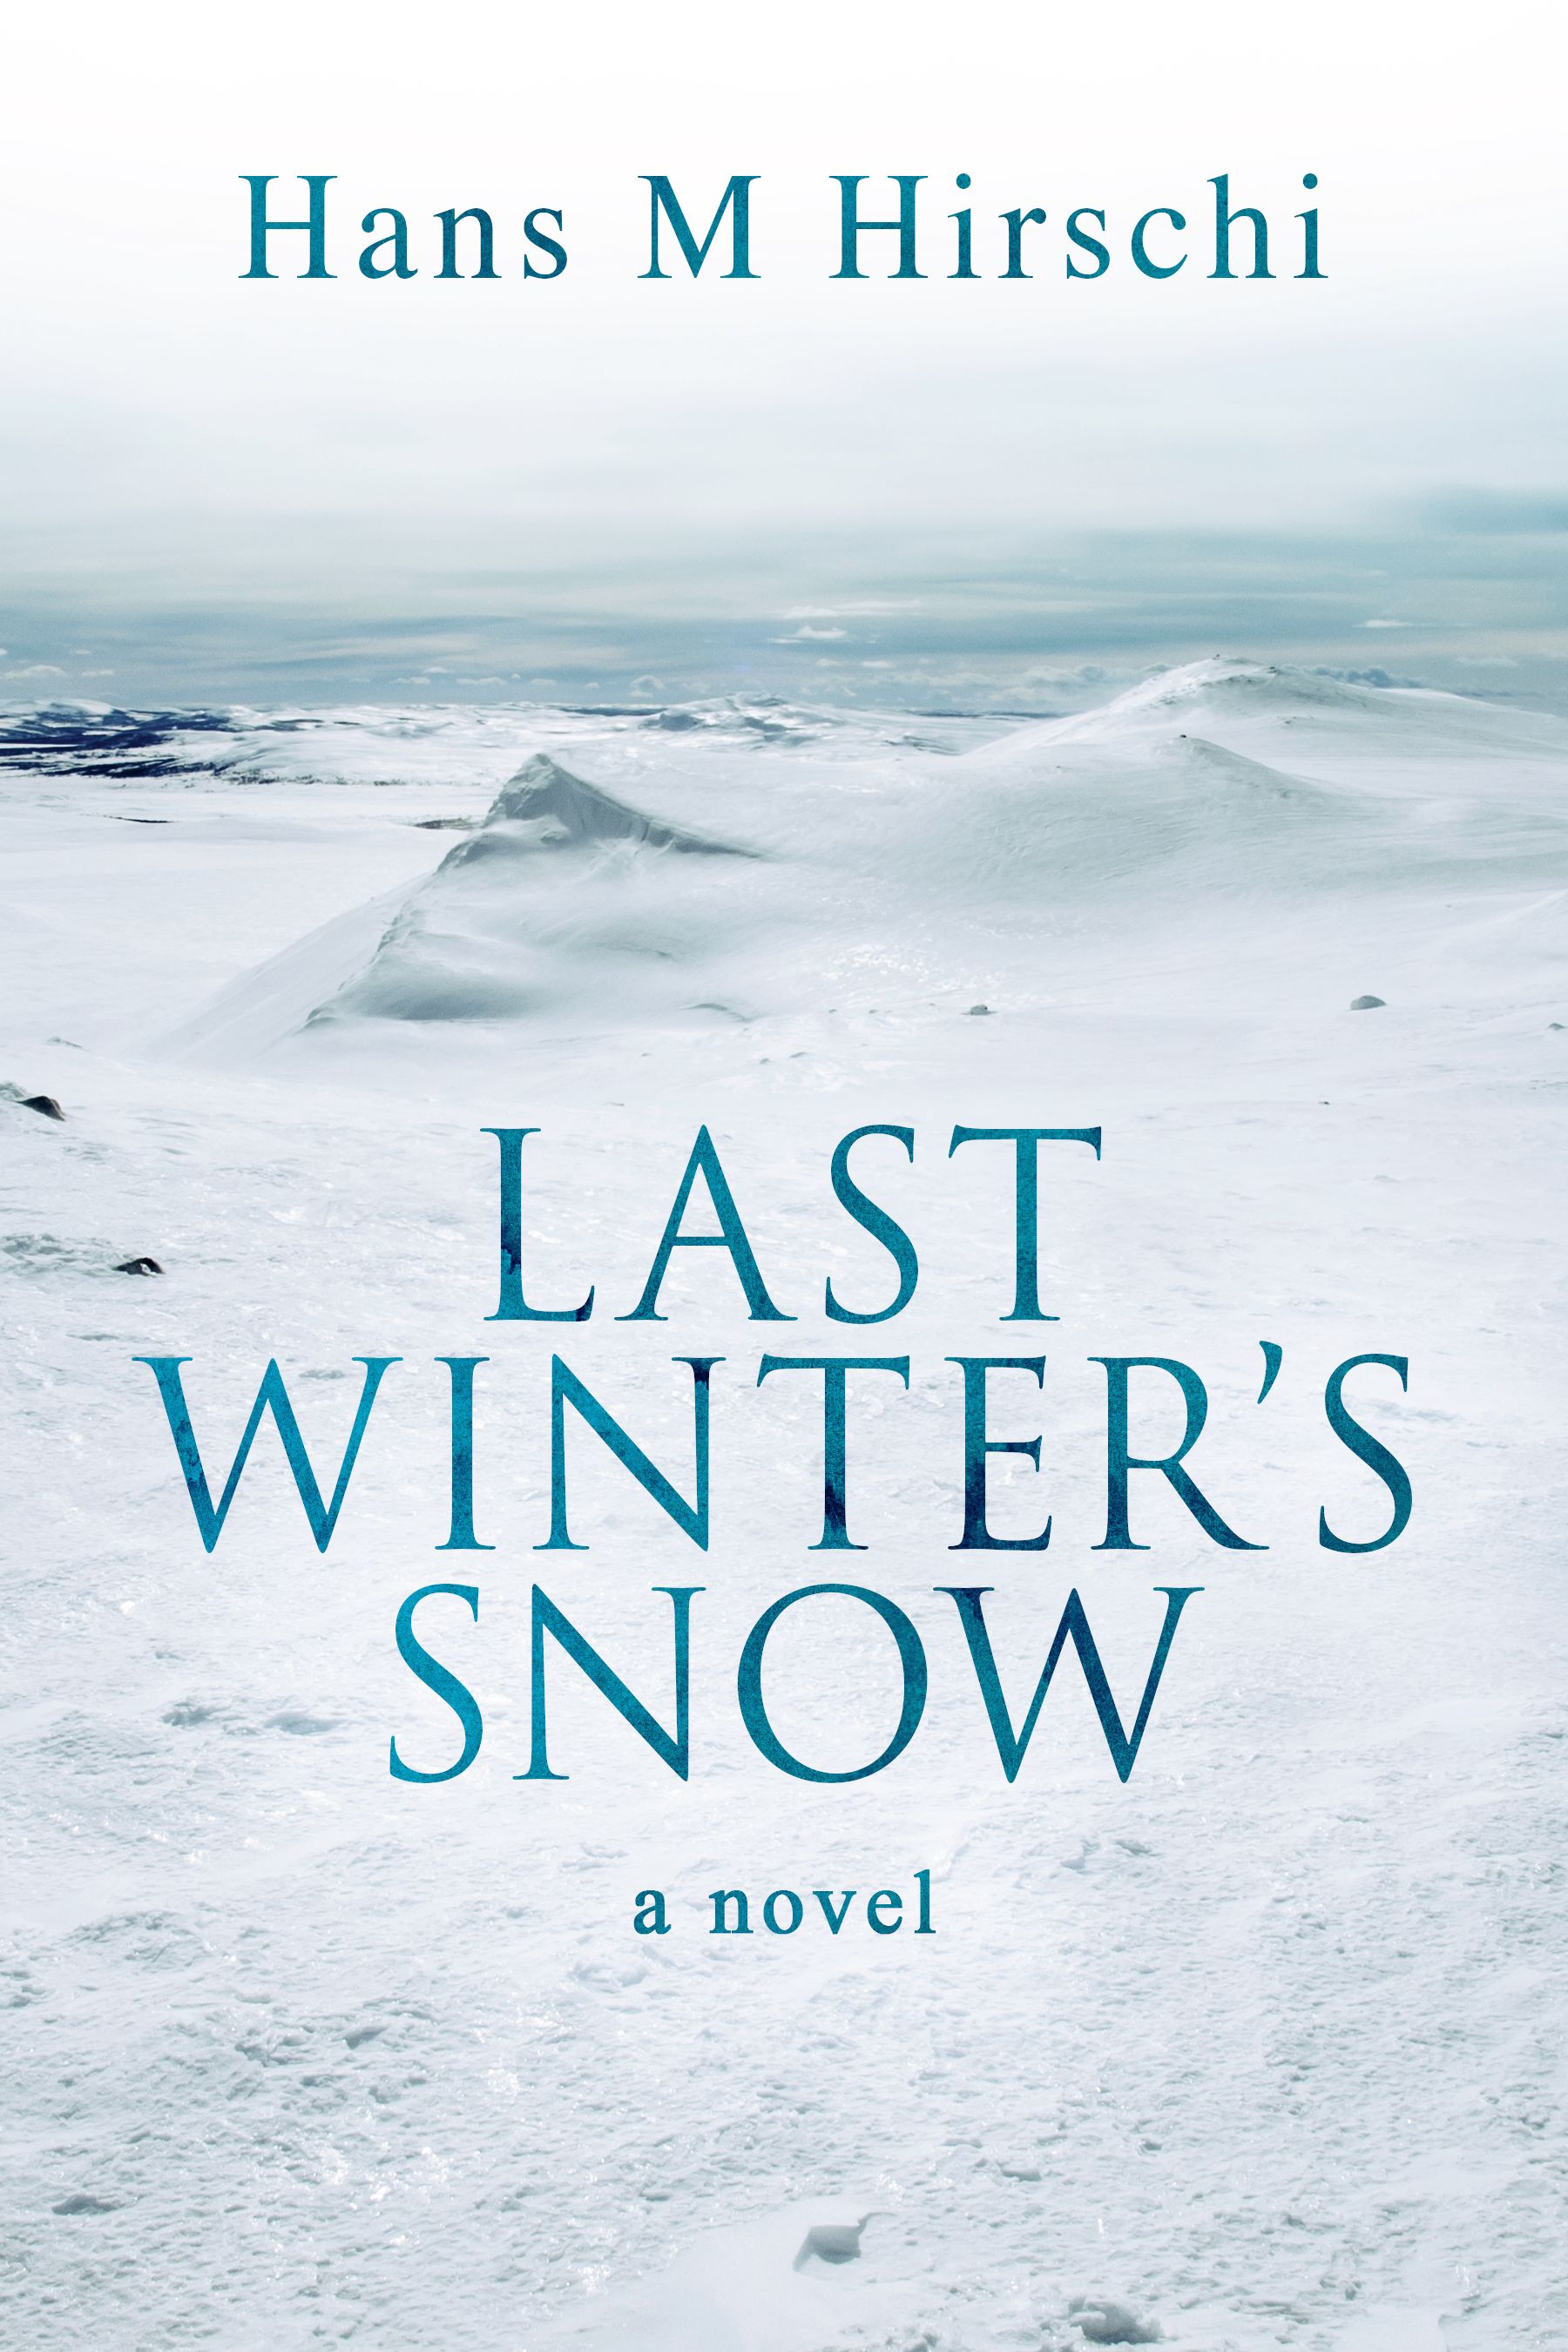 Last Winter's Snow, e-bog af Hans M Hirschi